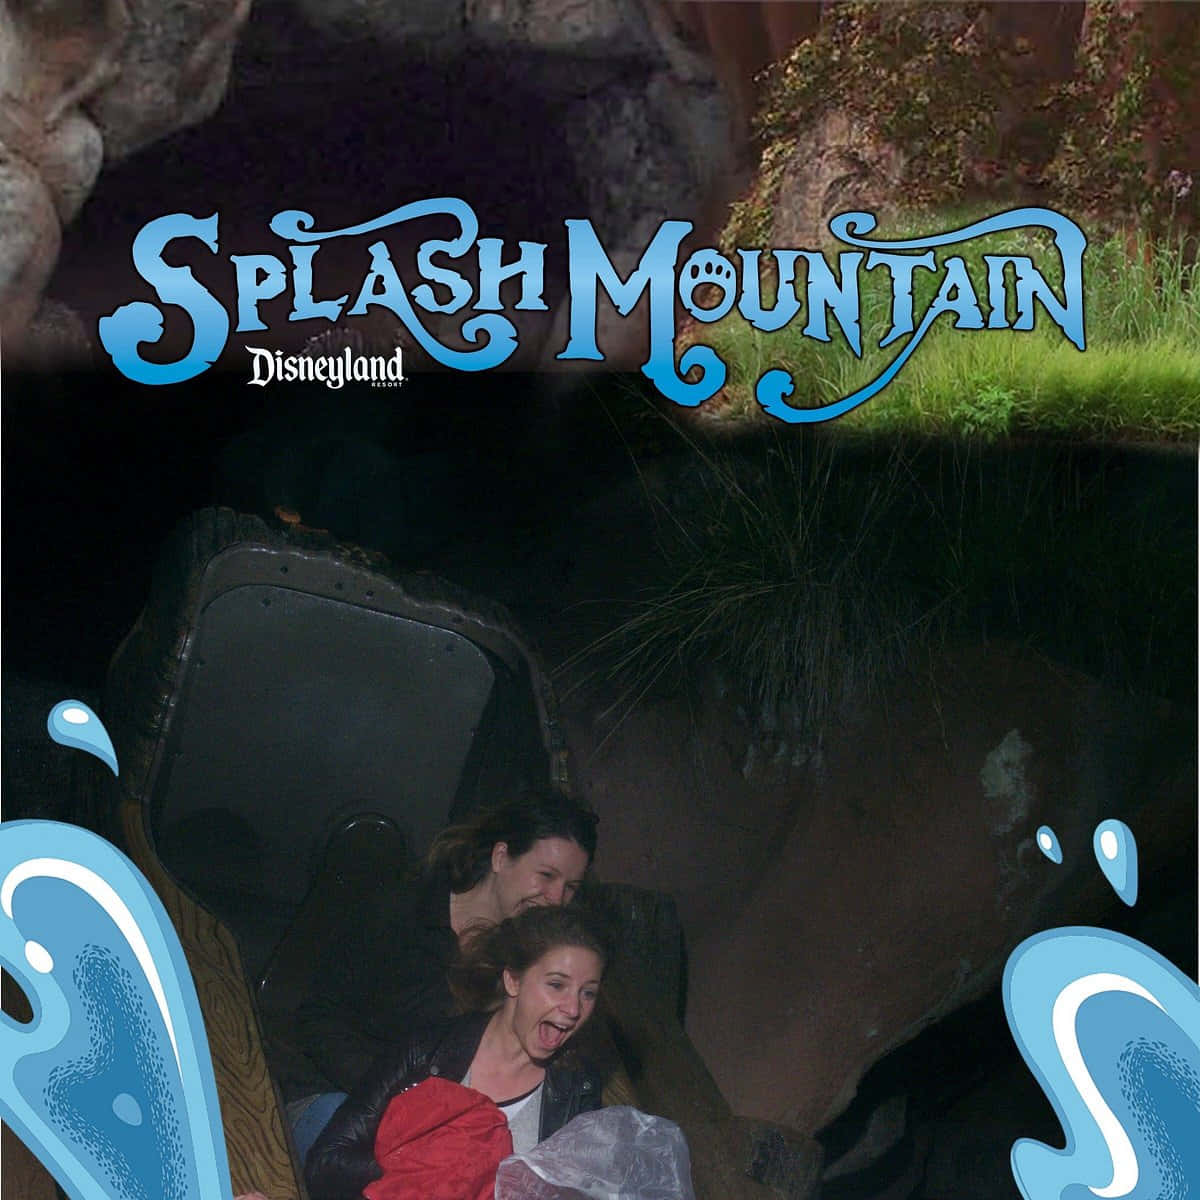 Splashmountain Disneyland - Montagna Splash Disneyland